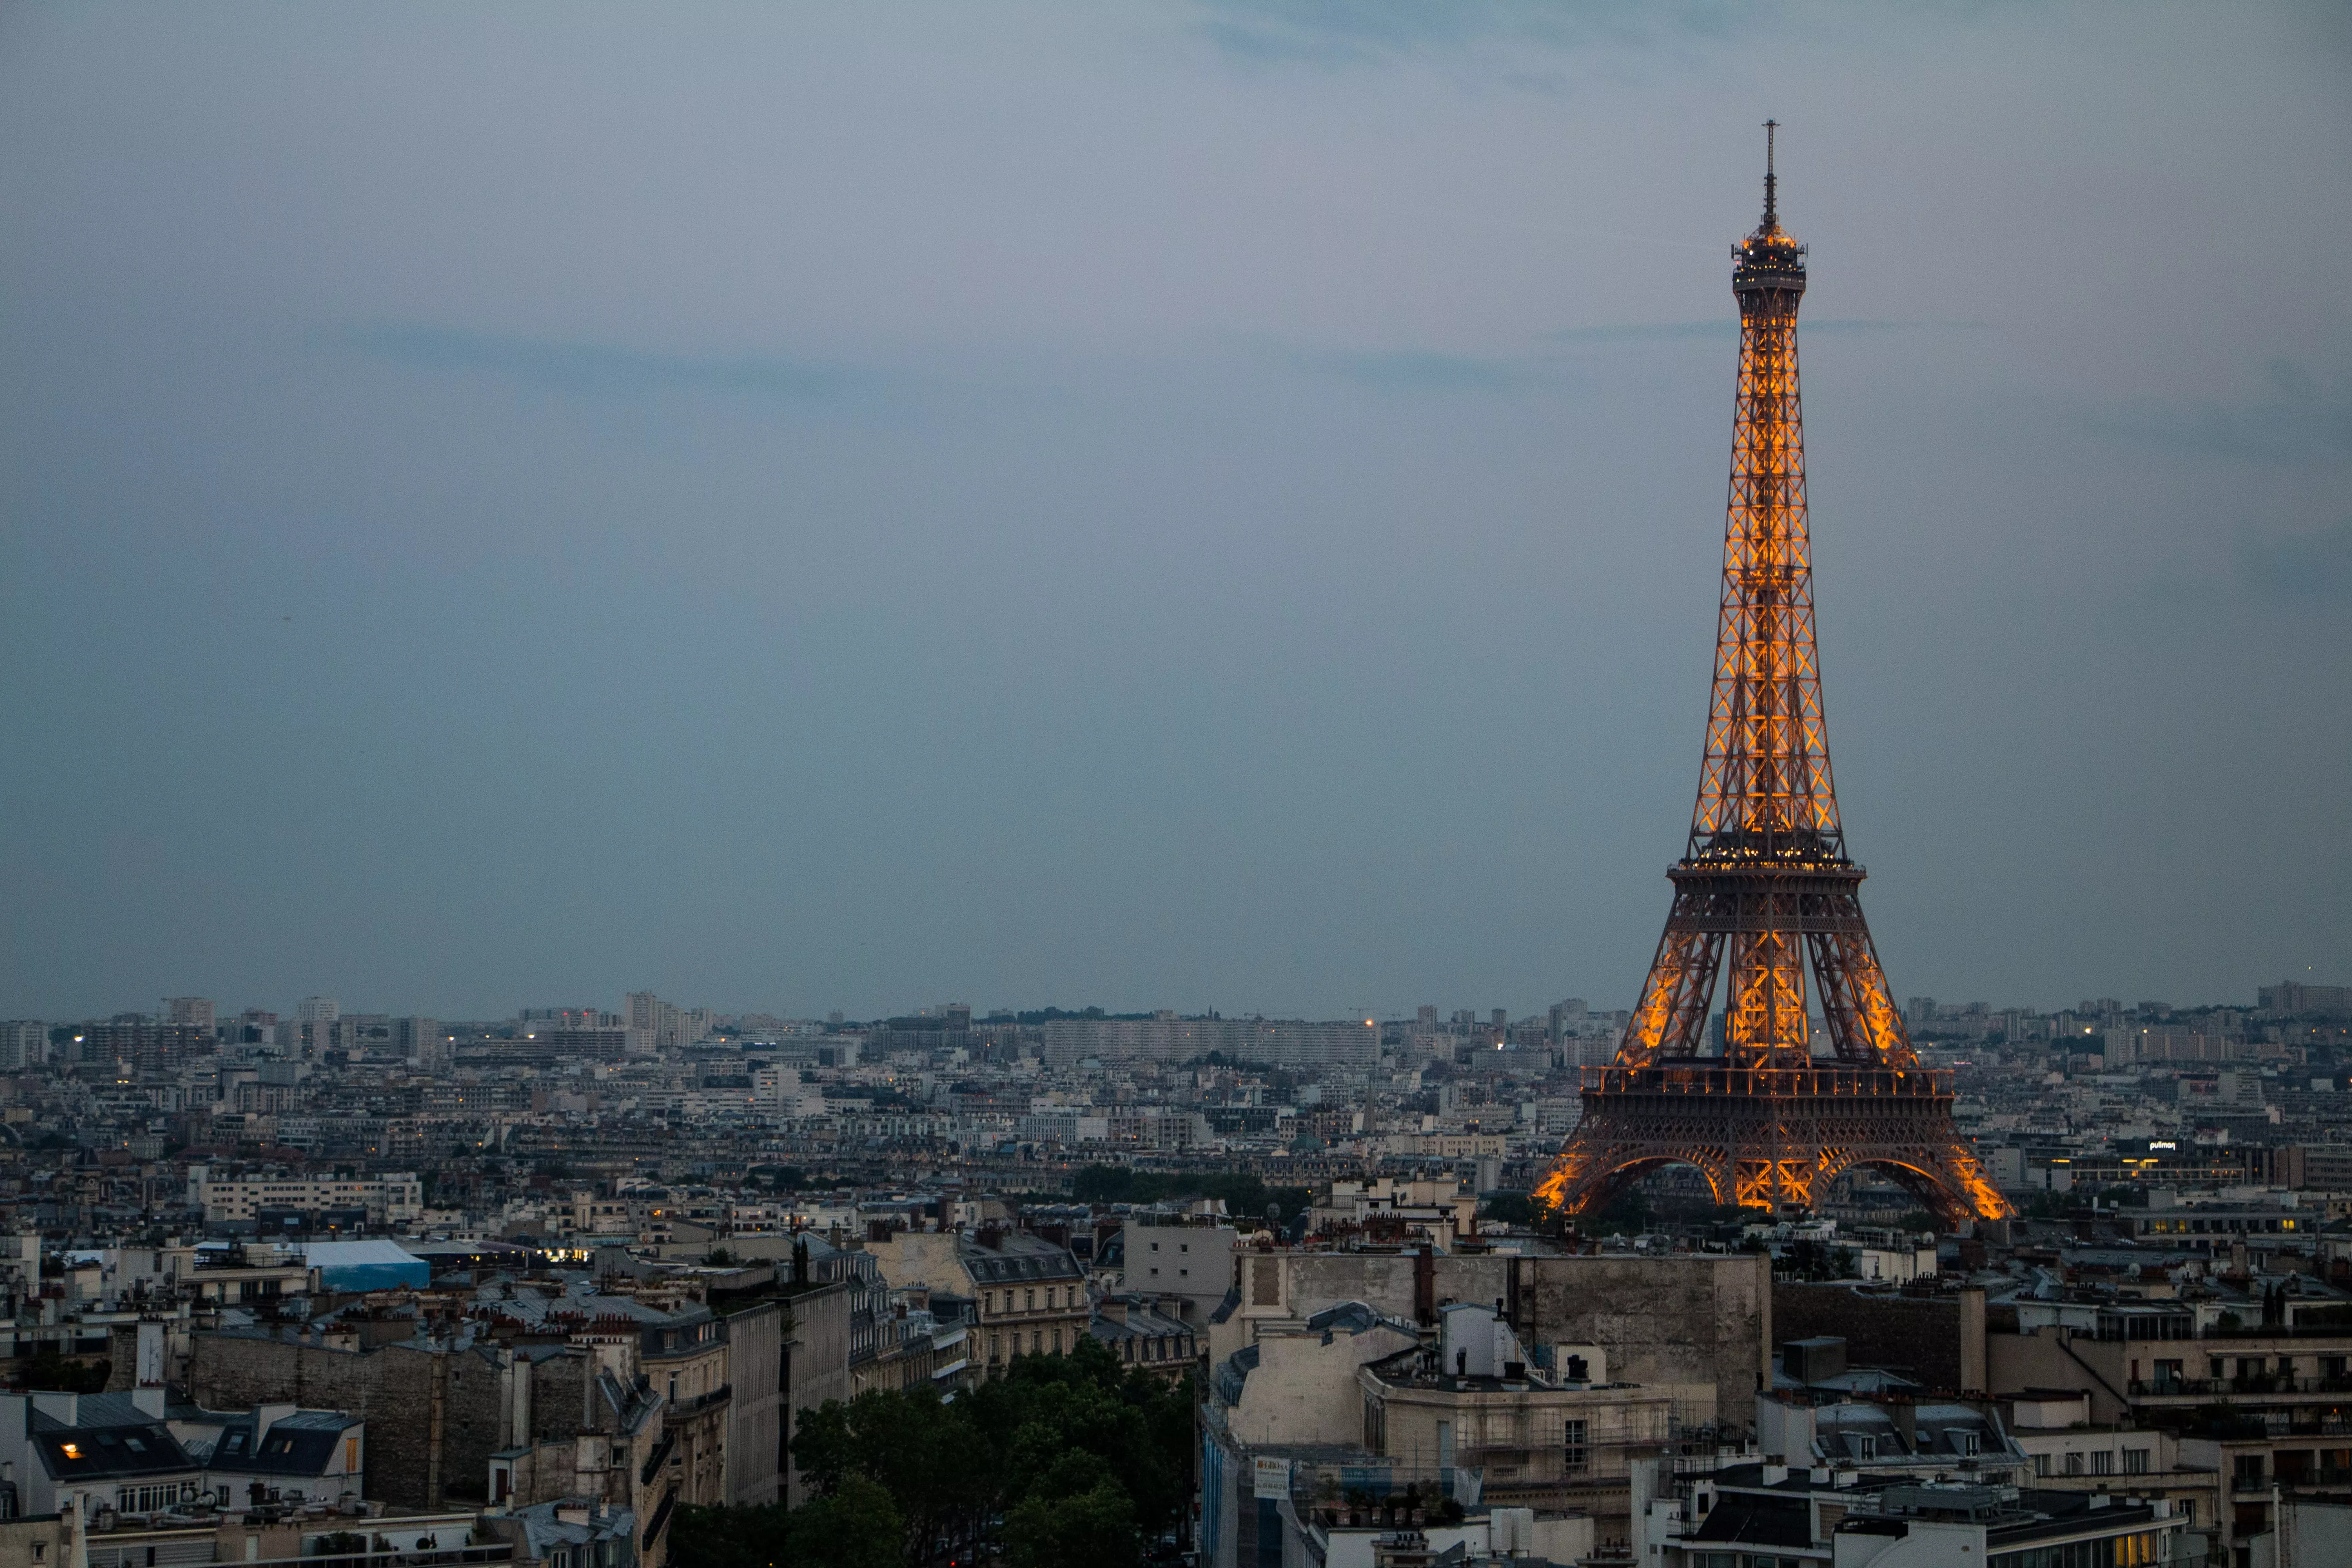 Photo Paris Tour Eiffel